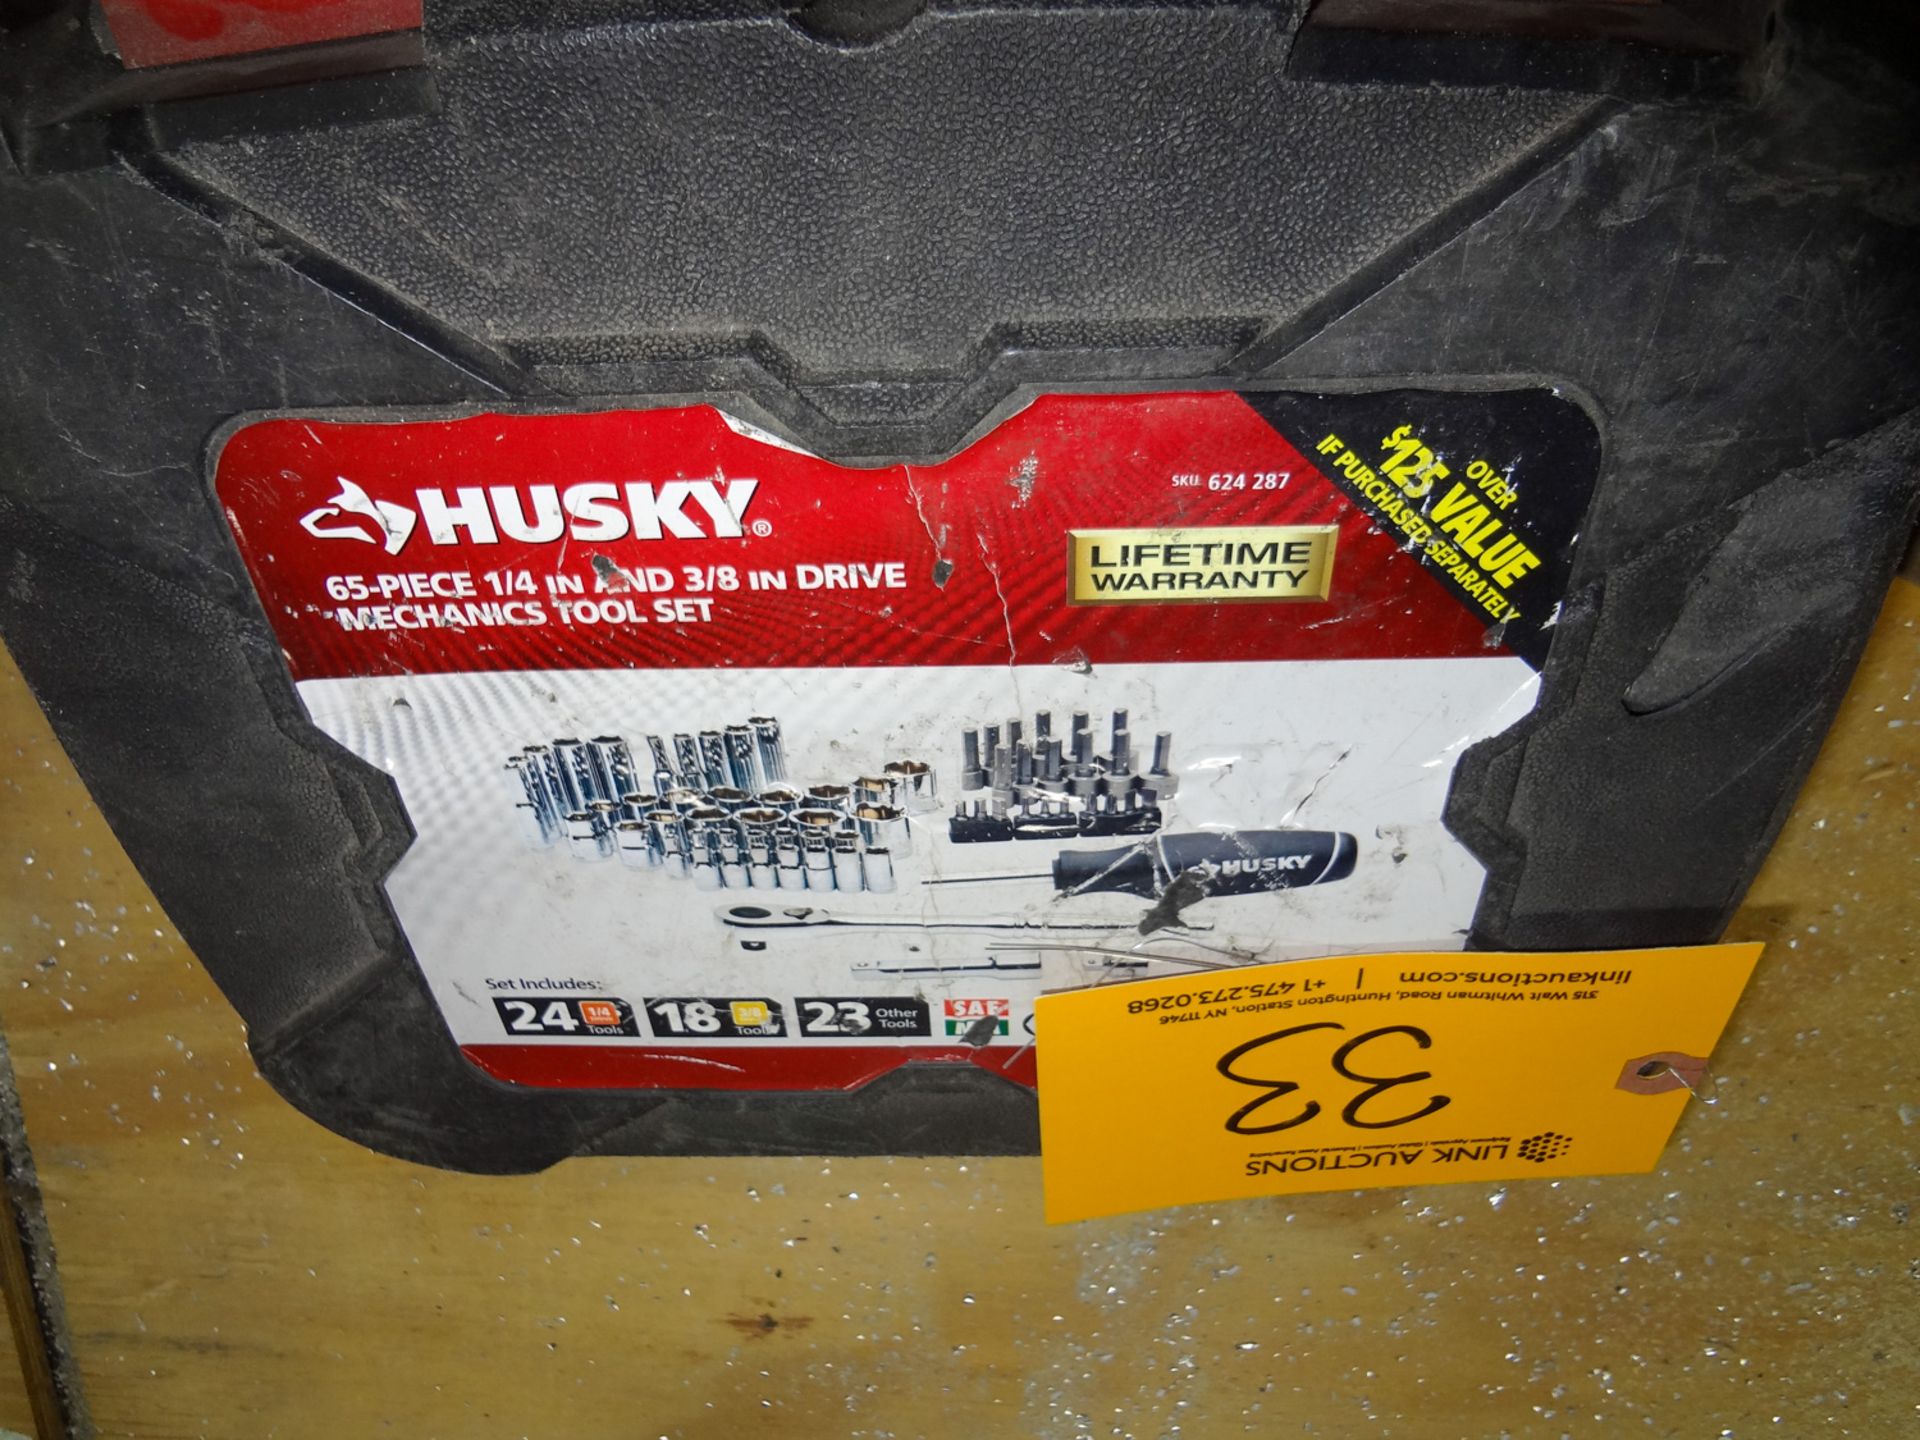 Husky 65 Piece 1/4" And 3/8" Socket Set